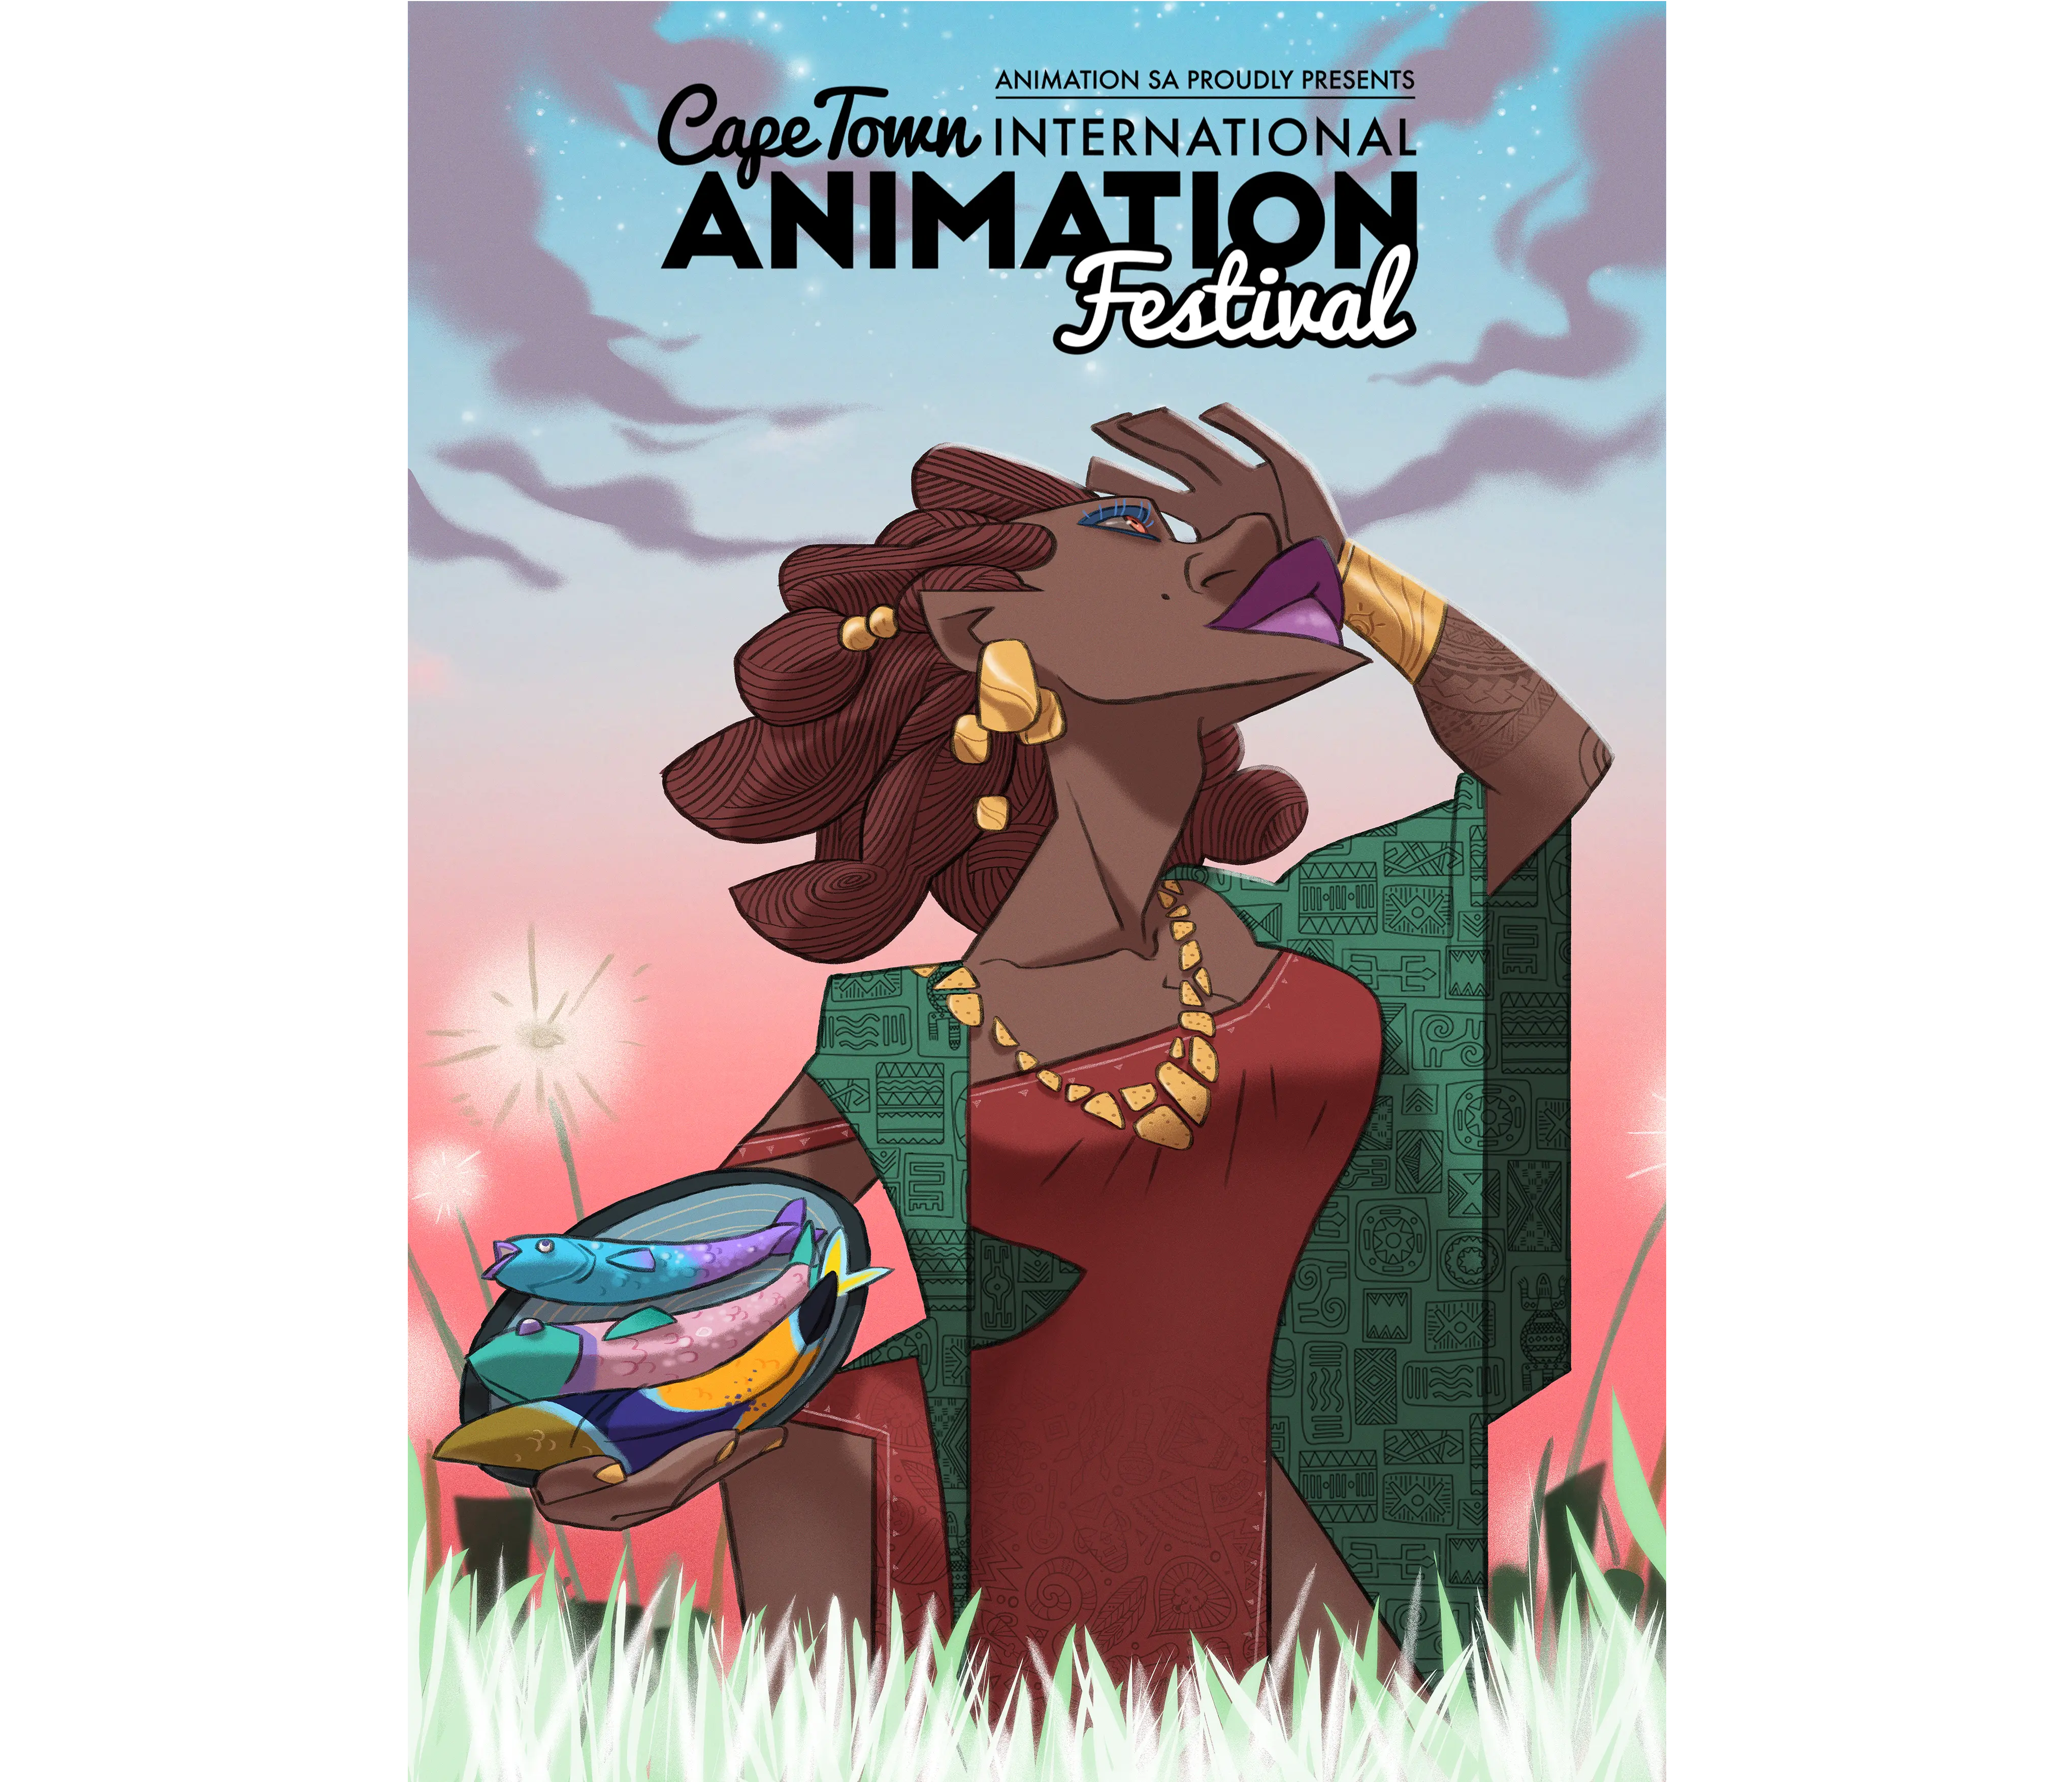 Capetown Animation Festival